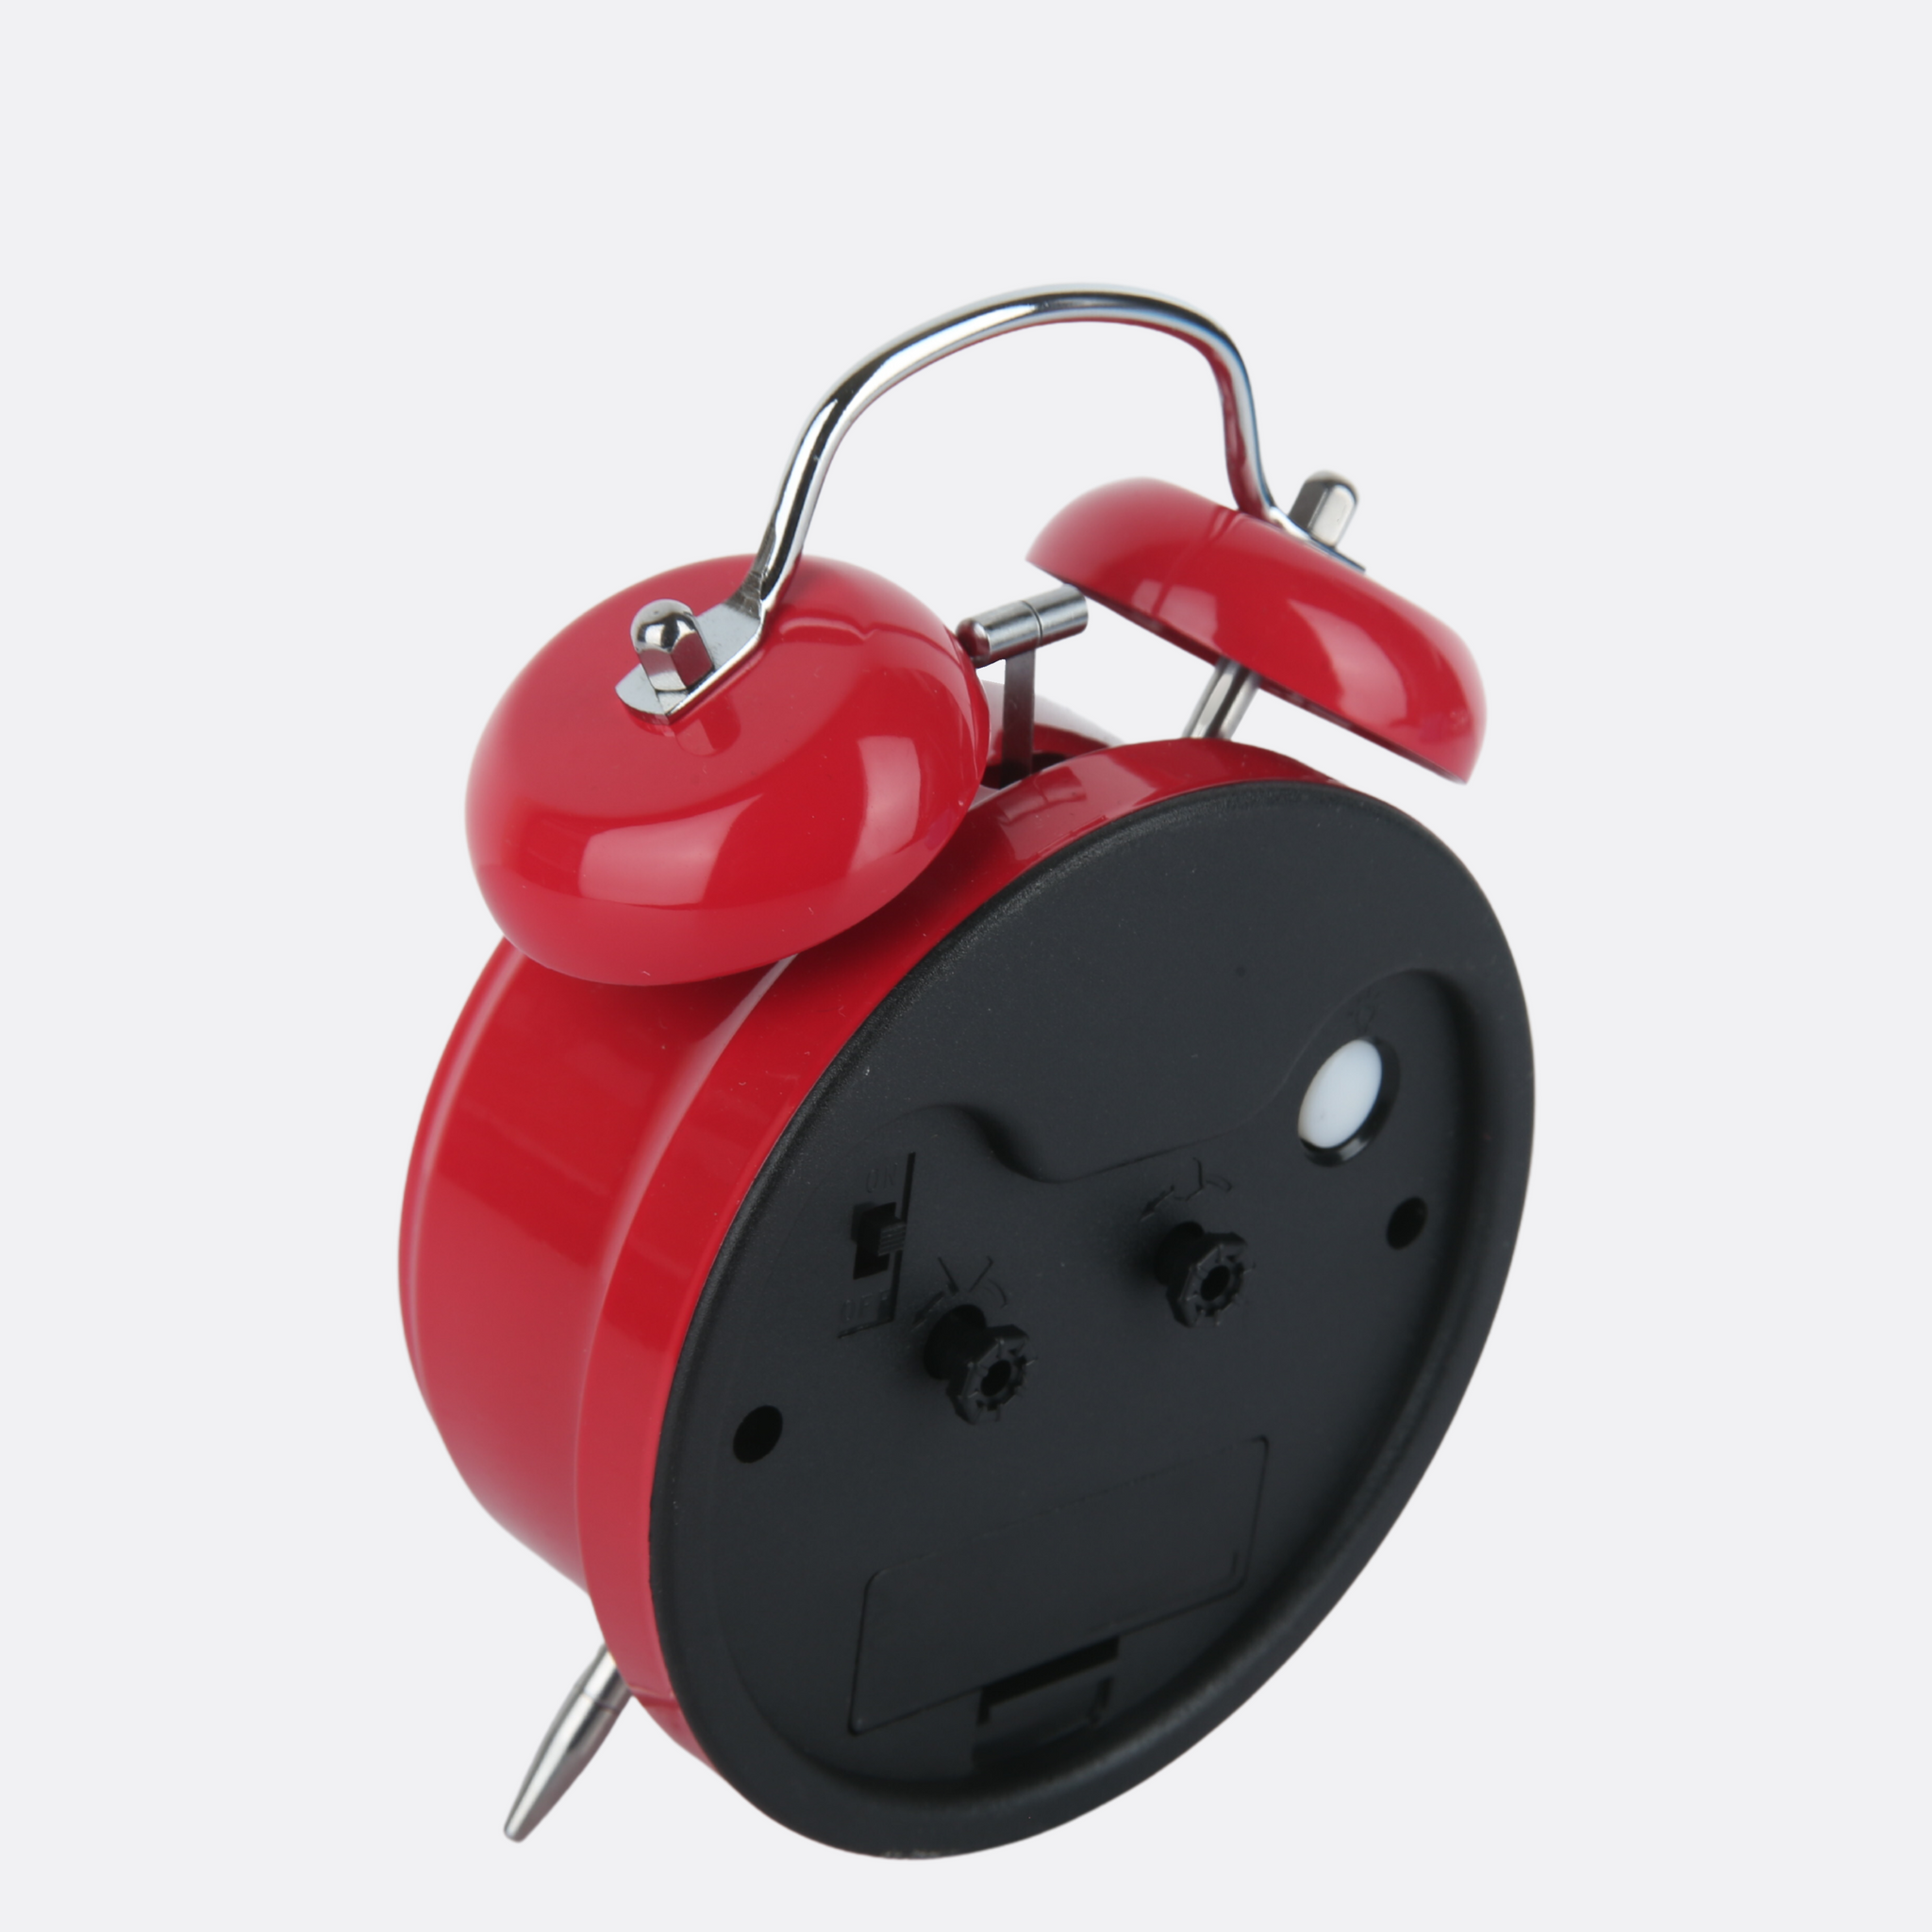 Scarlet Metallic Alarm Clock